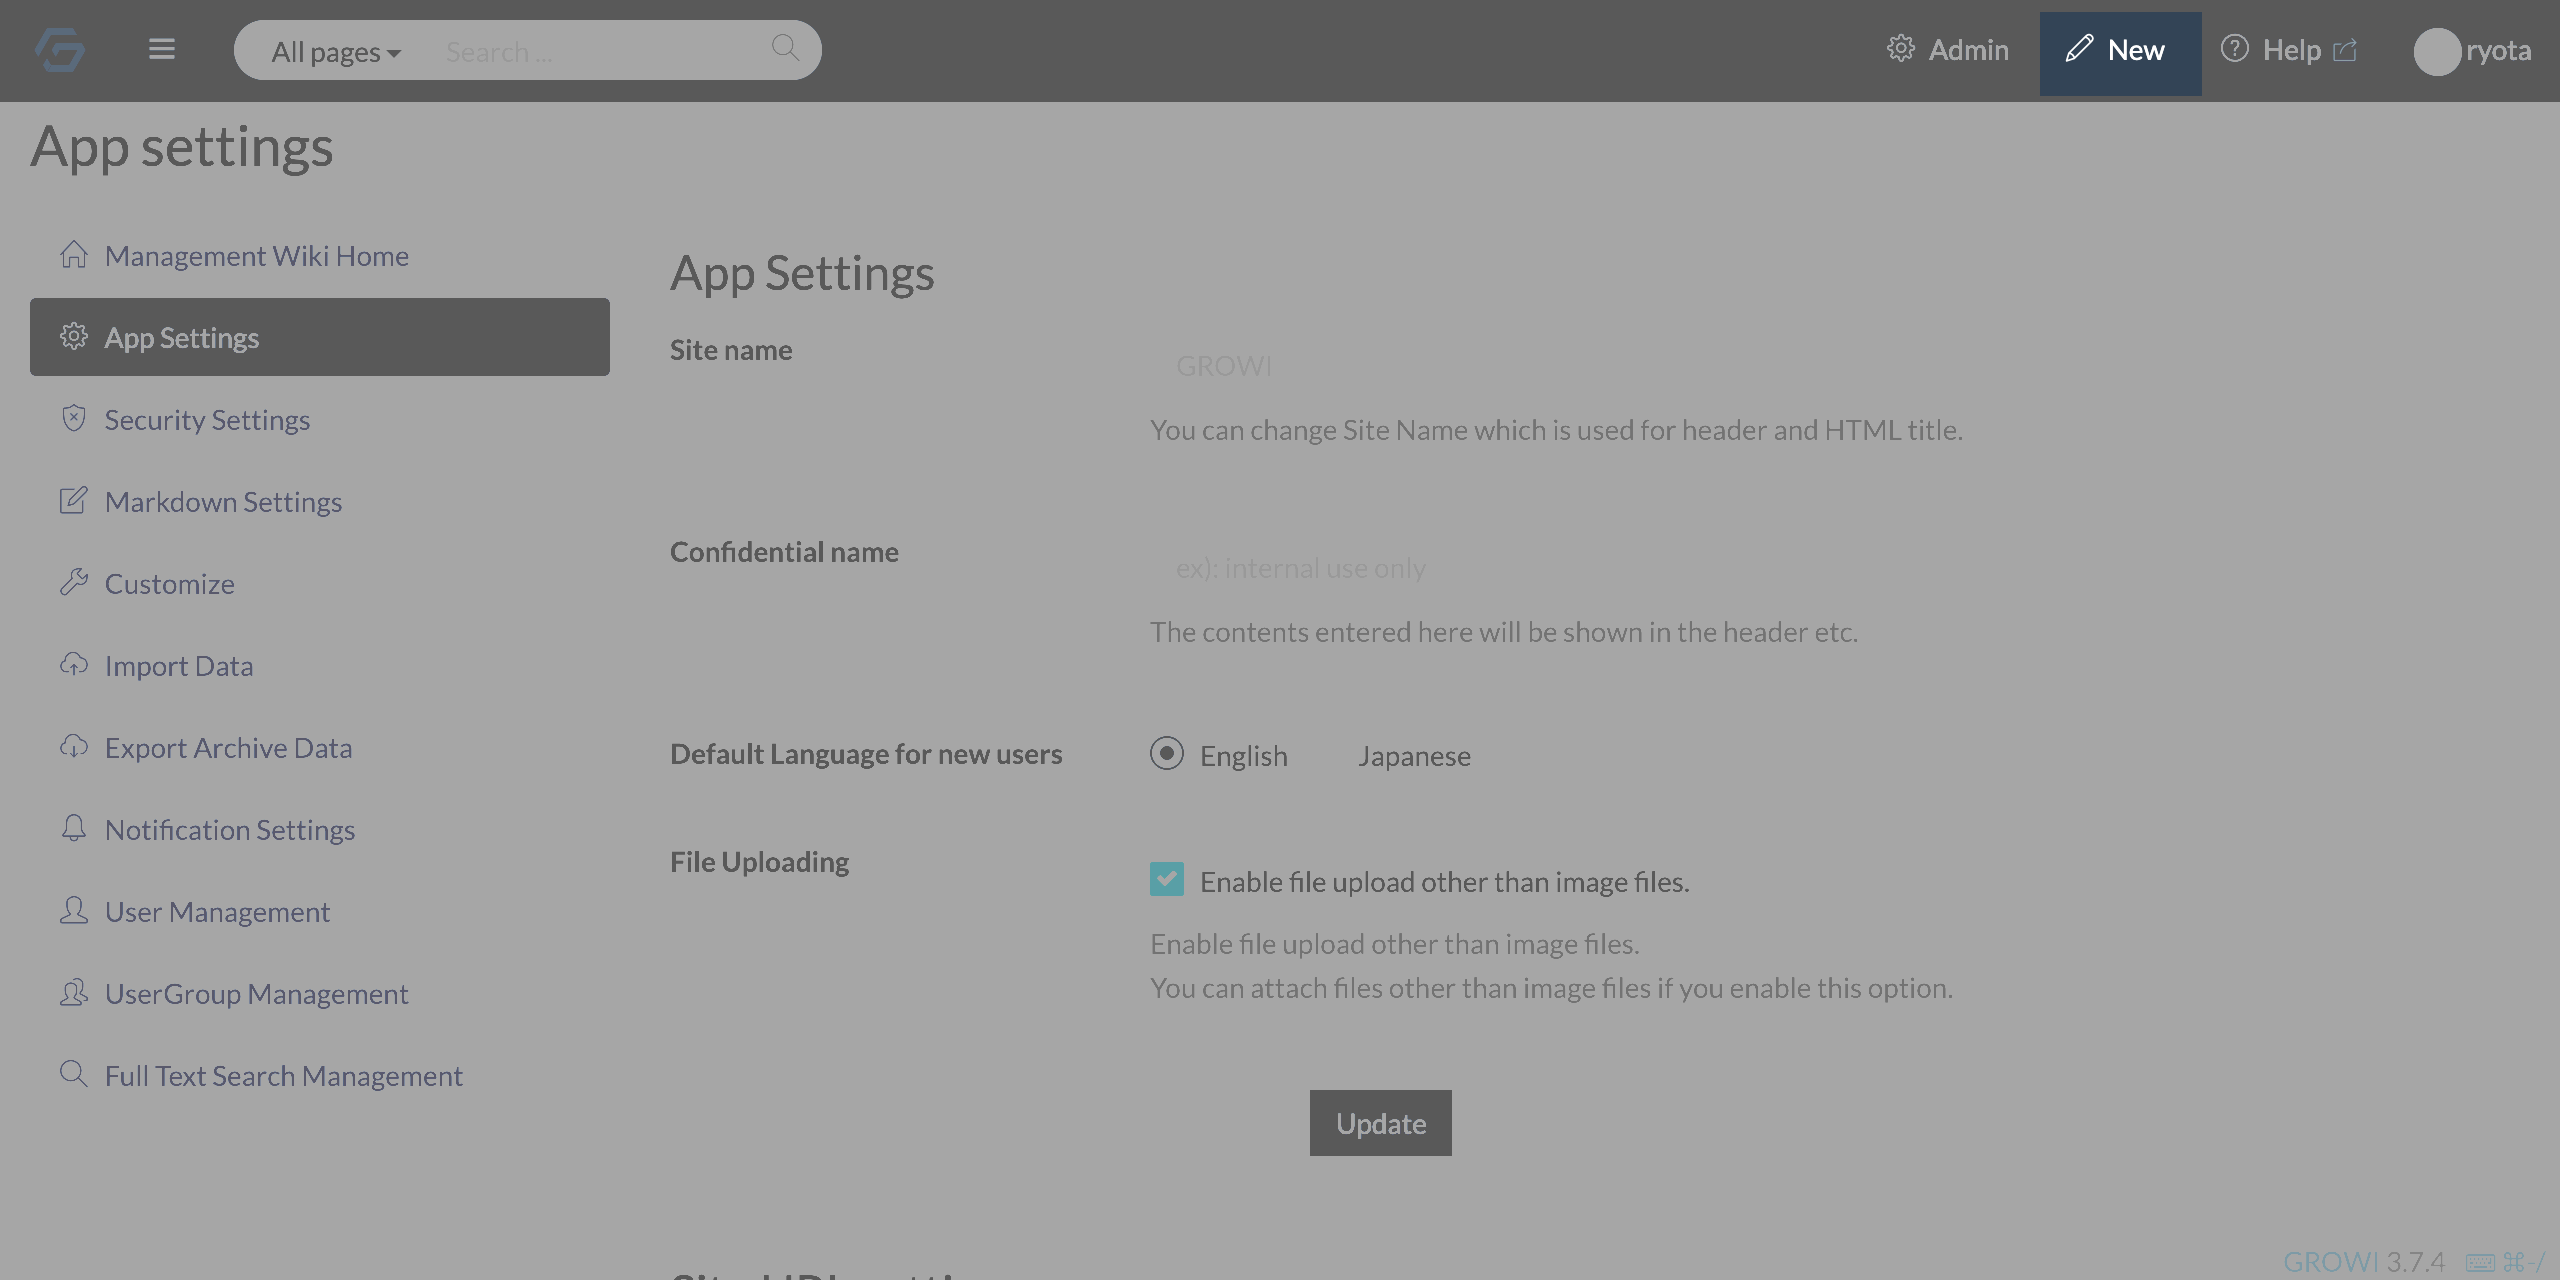 FireShot Capture 017 - App settings - GROWI - localhost2.png